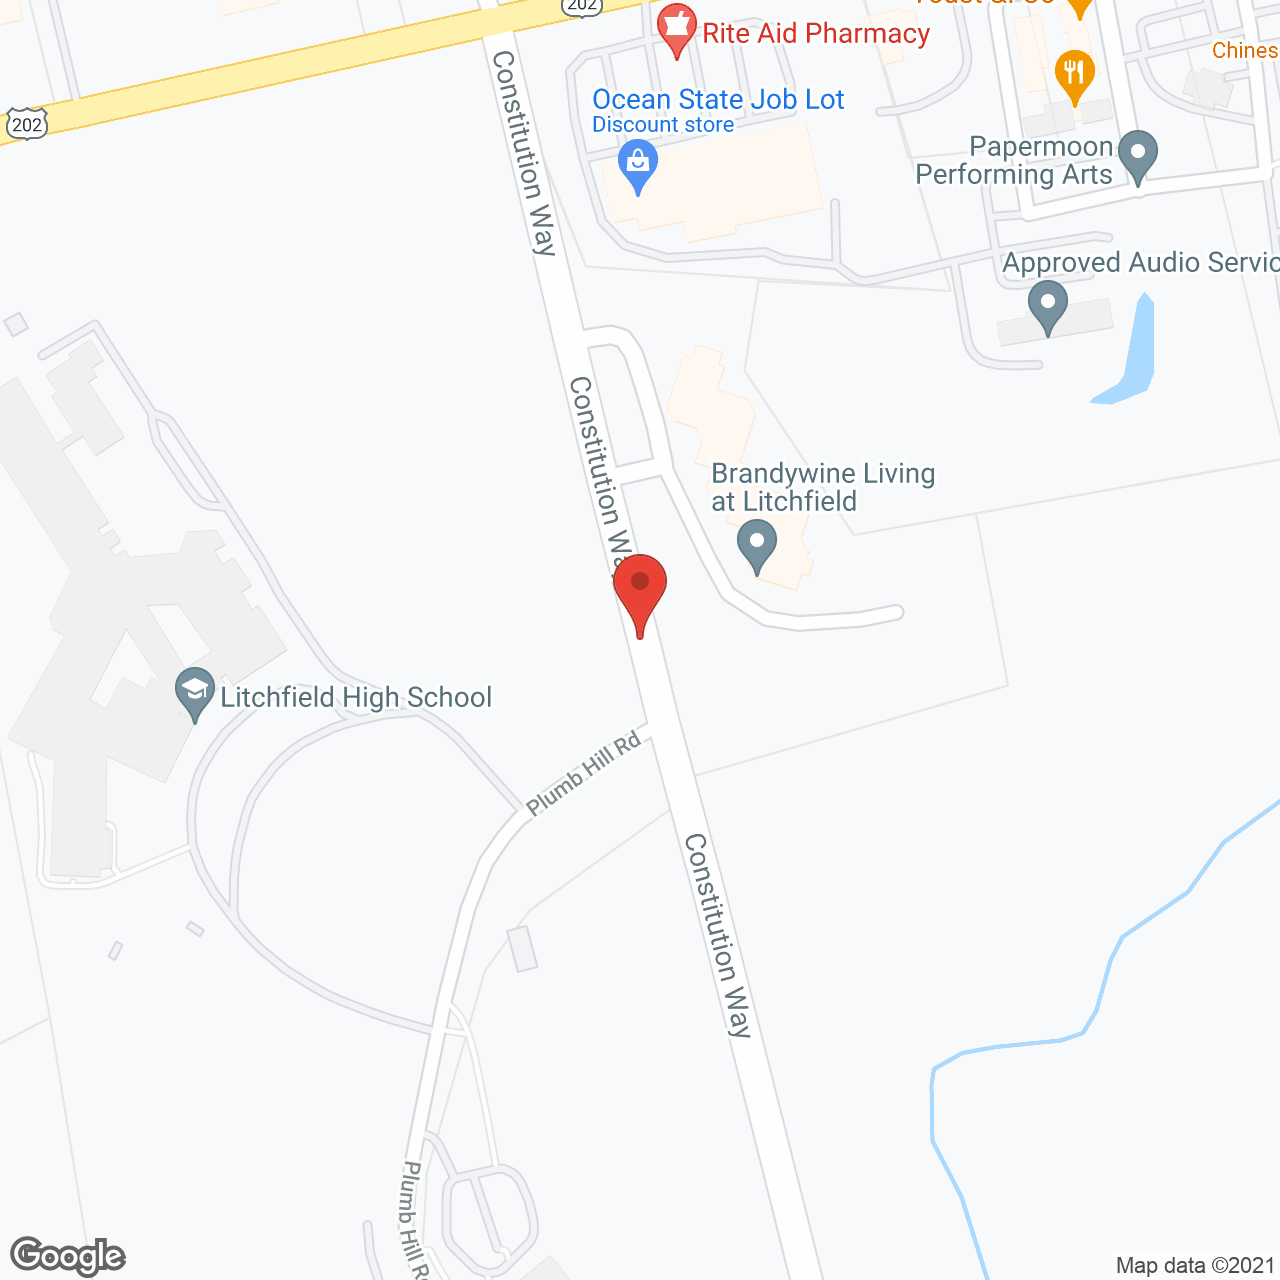 Brandywine Living at Litchfield in google map